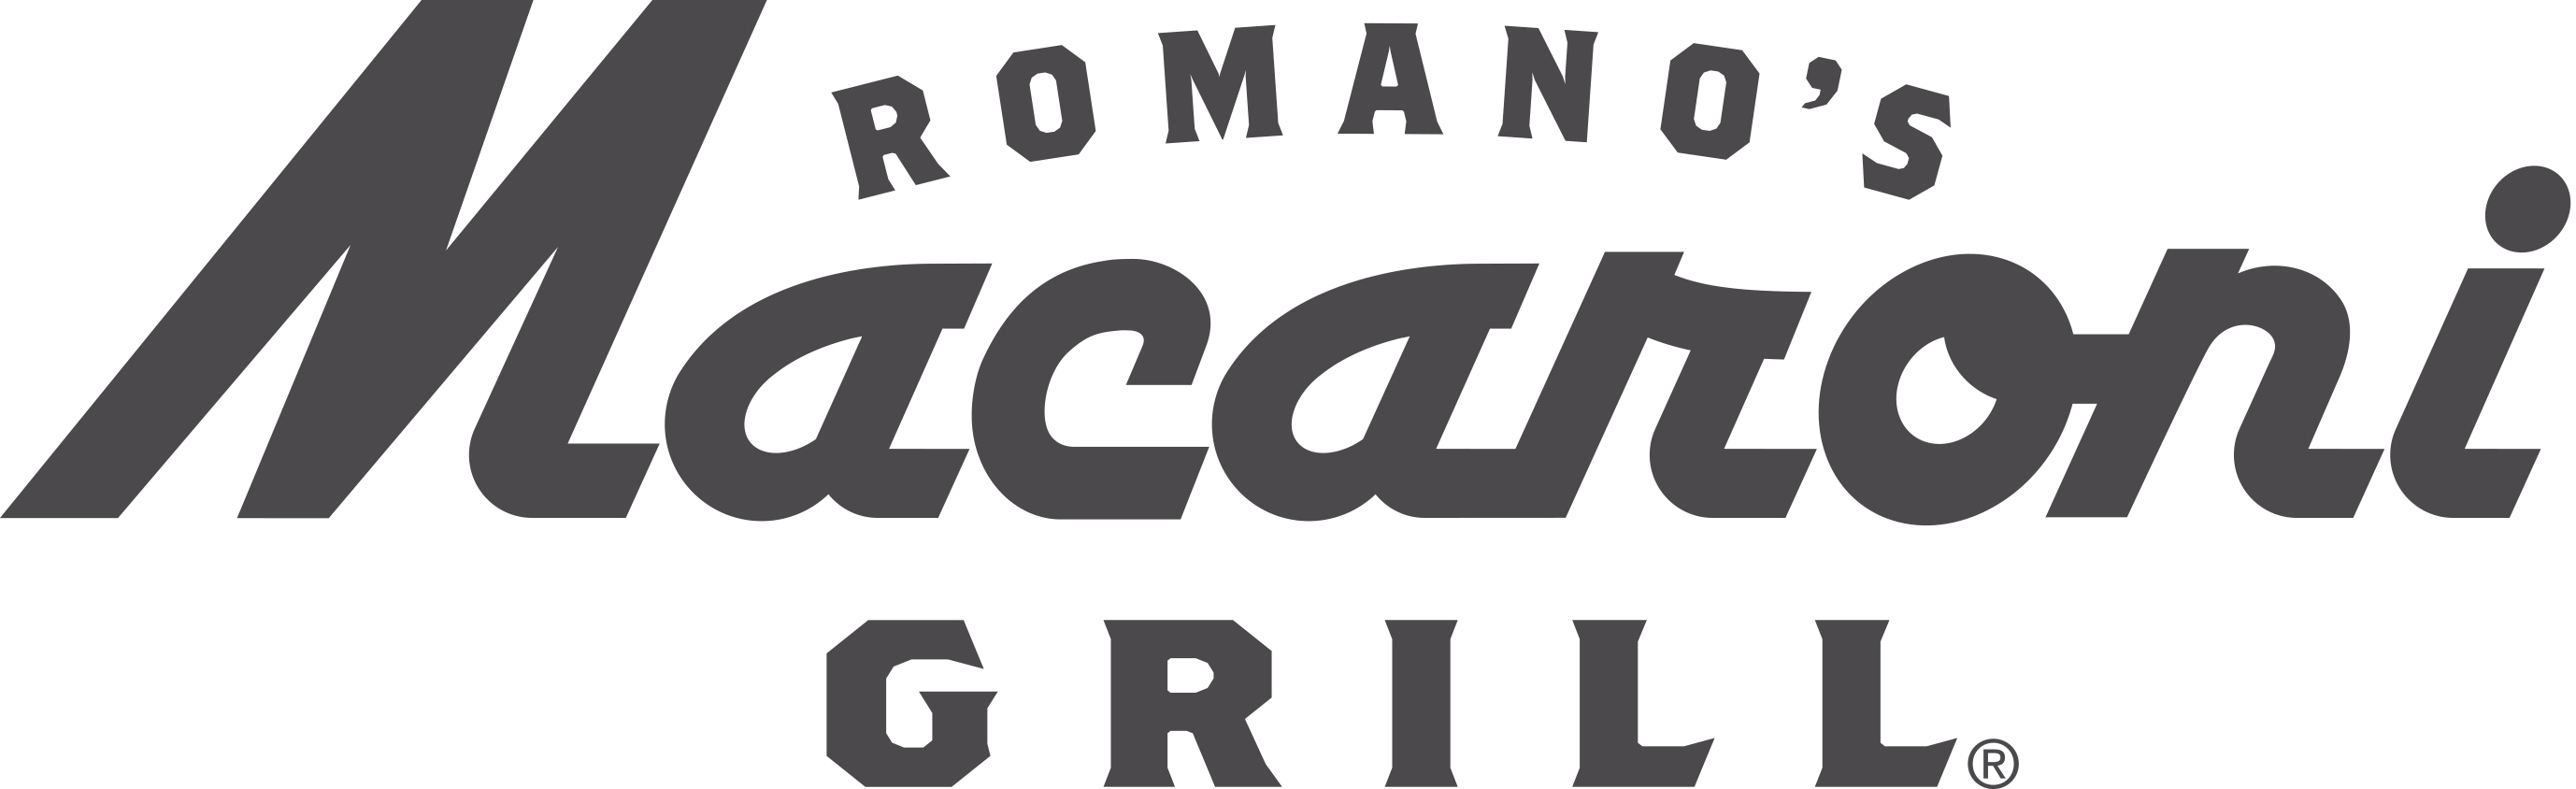 Macaroni Grill Logo